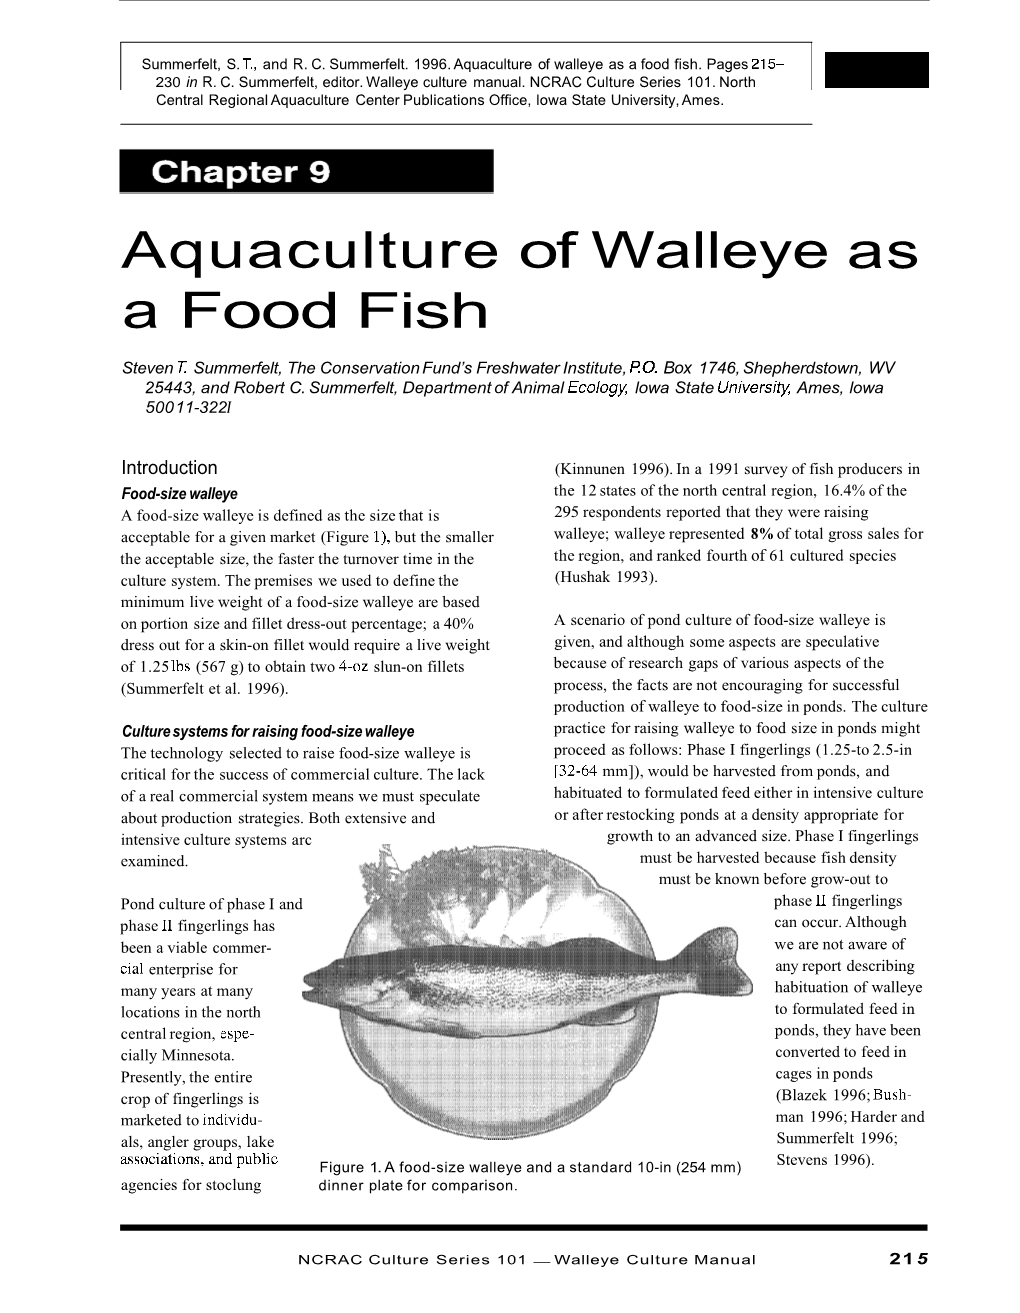 Aquaculture of Walleye As a Food Fish